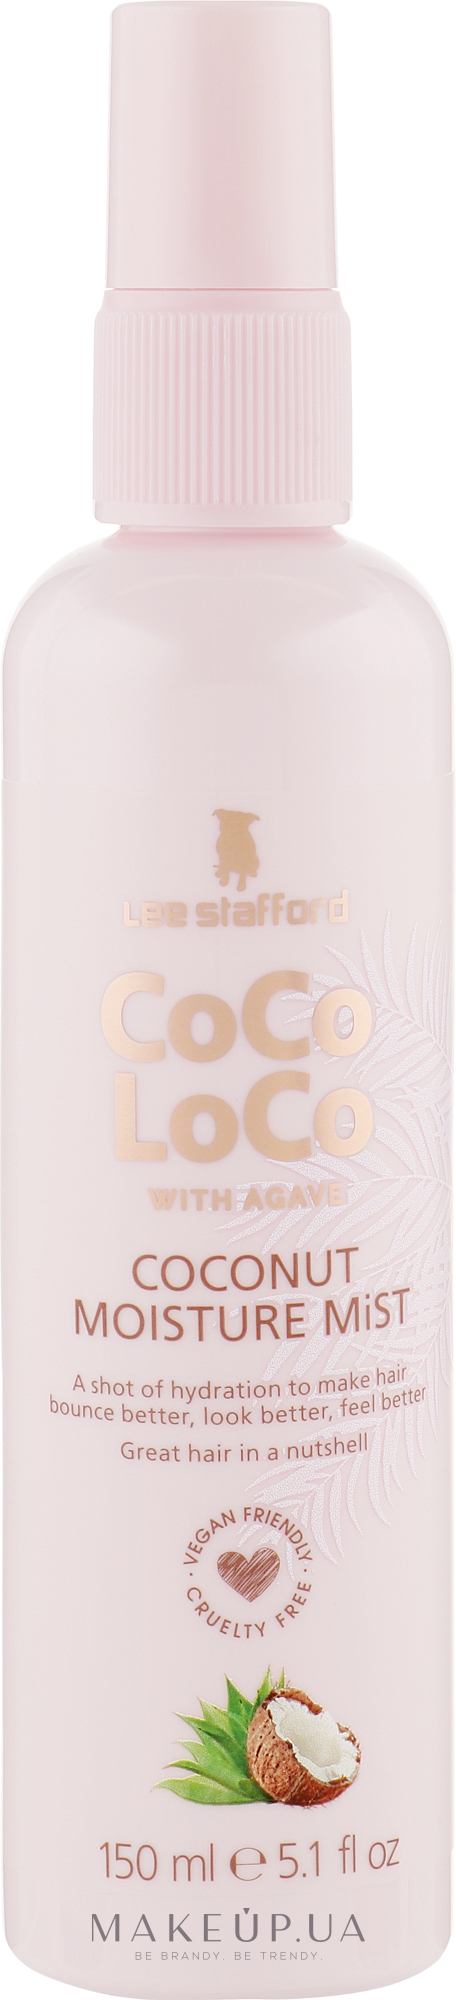 Зволожувальний спрей для волосся - Lee Stafford Coco Loco With Agave Heat Protection Mist — фото 150ml